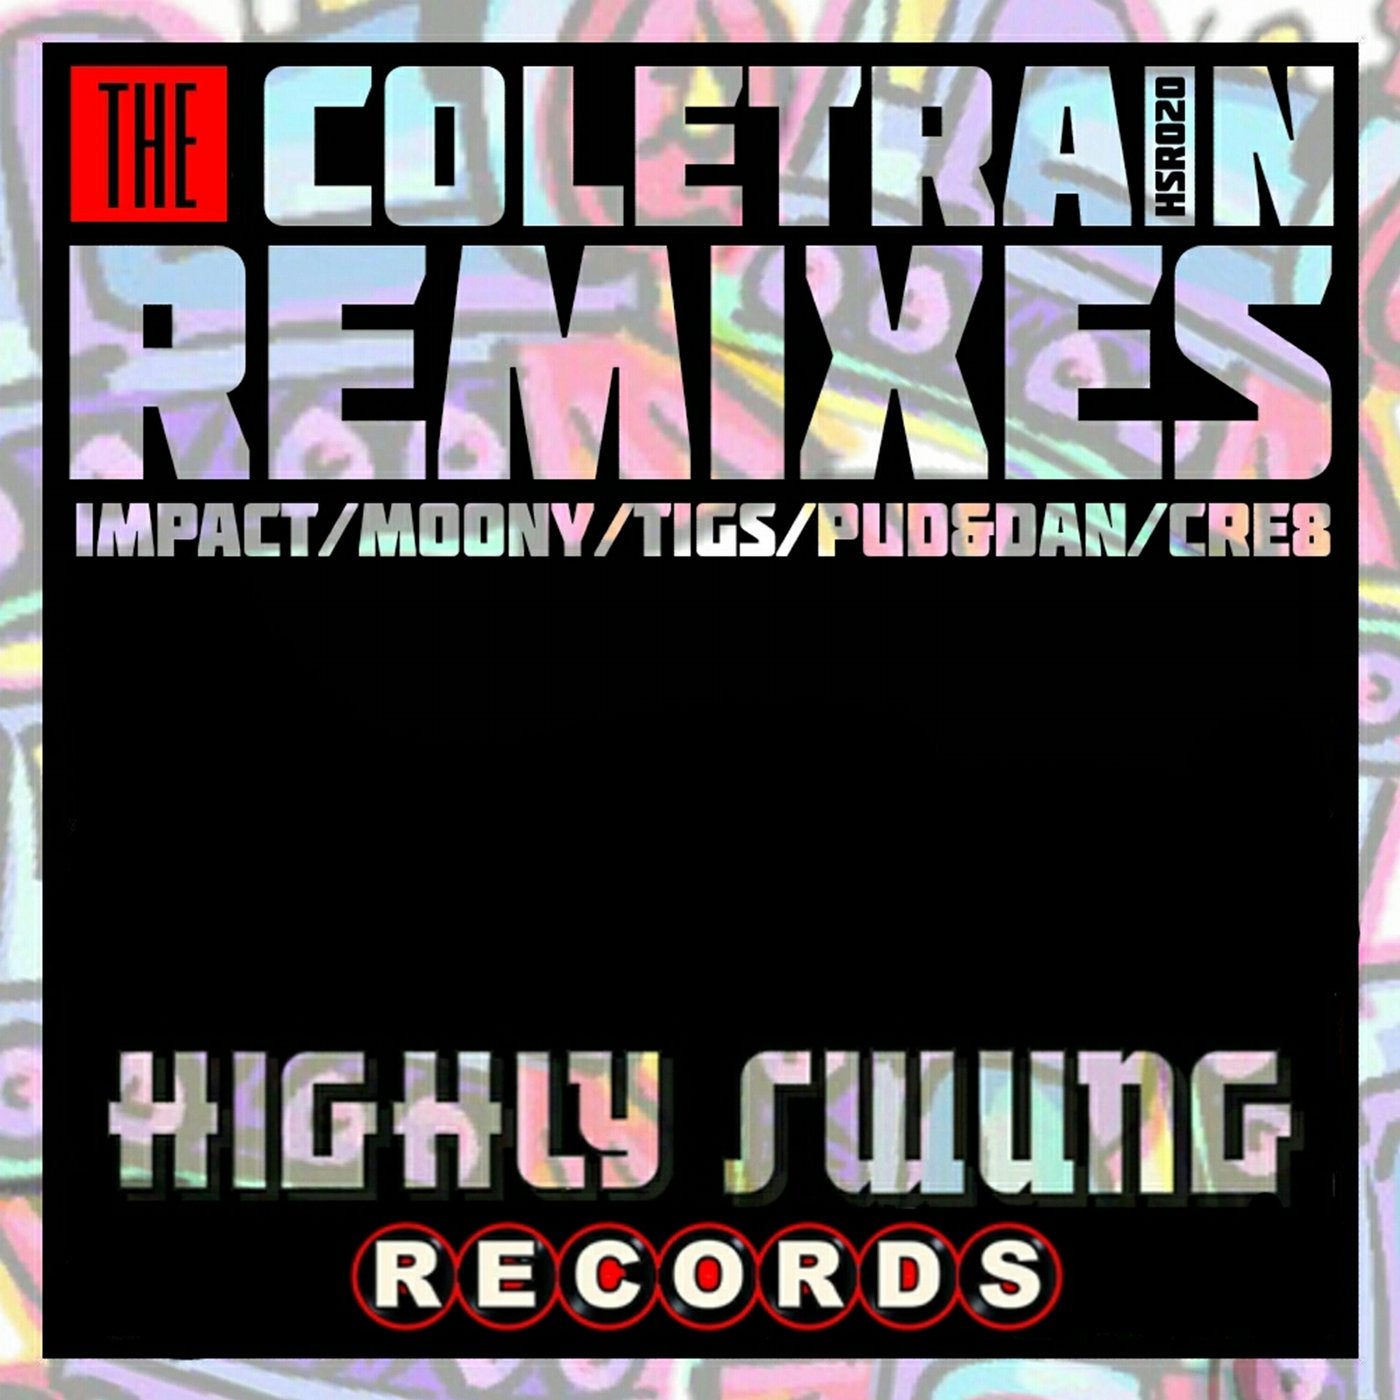 The Cole Train Remixes